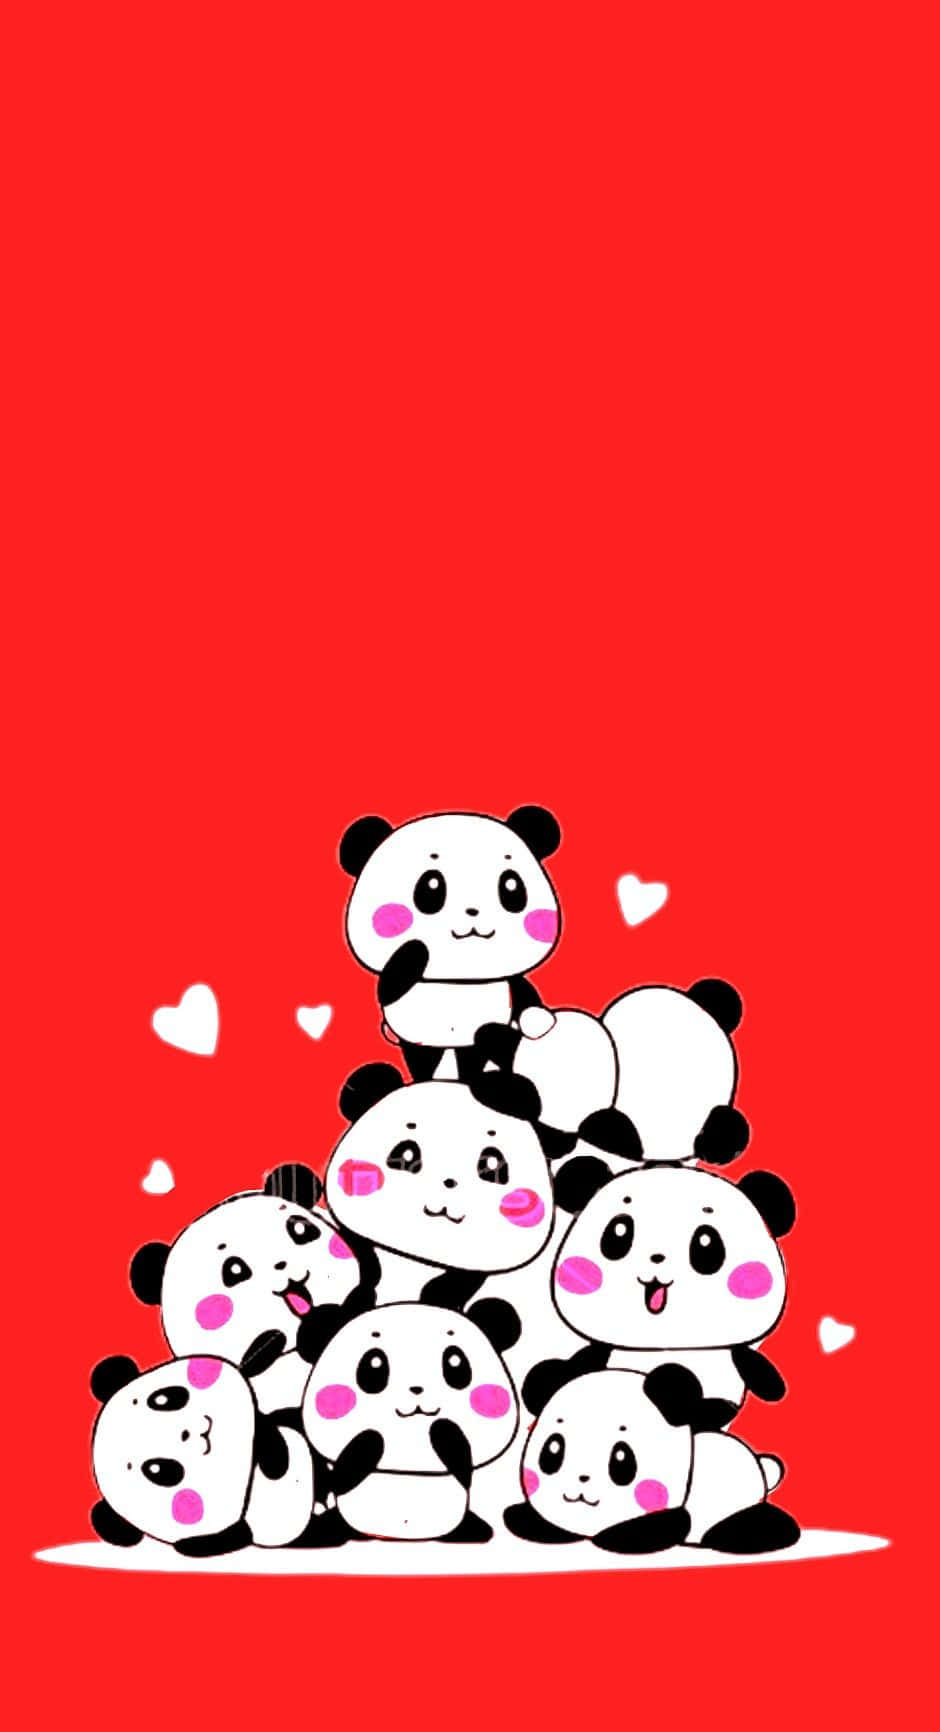 Download Girly Cute Panda Vector Illustration Wallpaper 